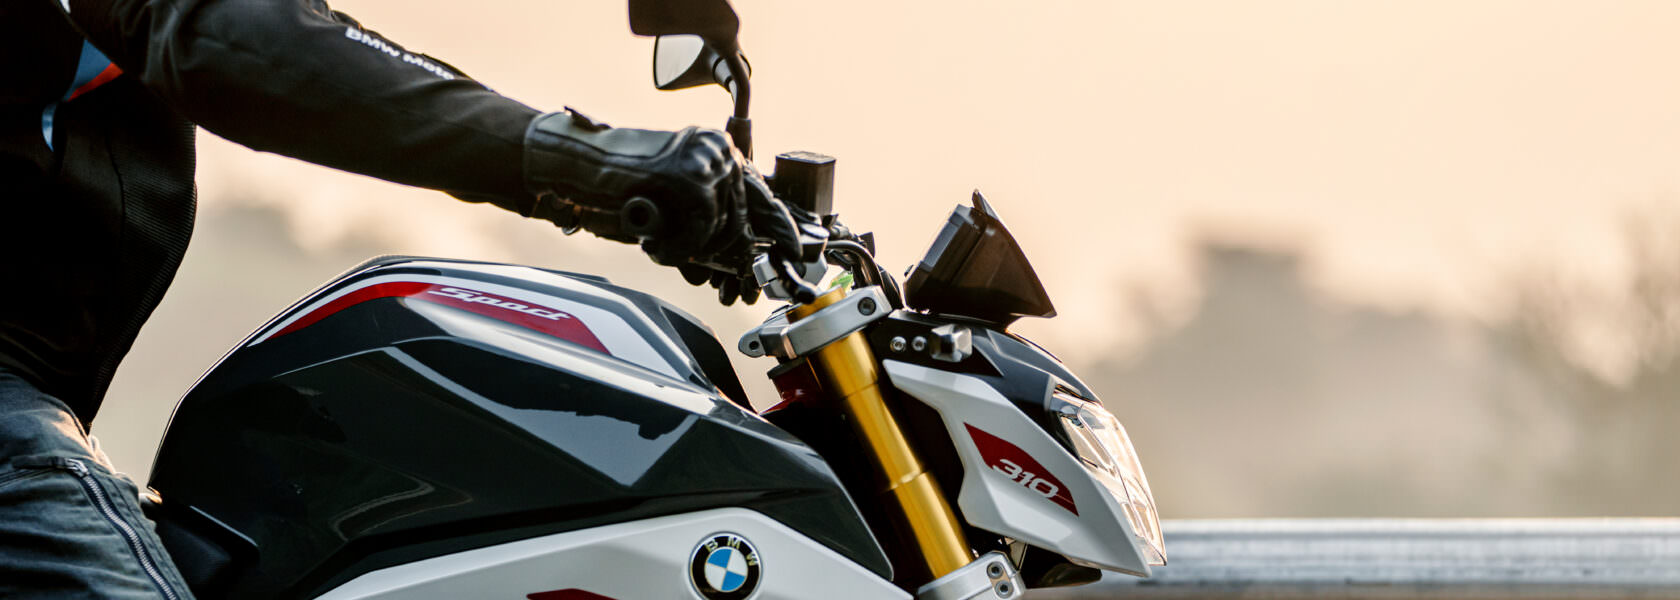 BMW Motorrad G 310 R 2020